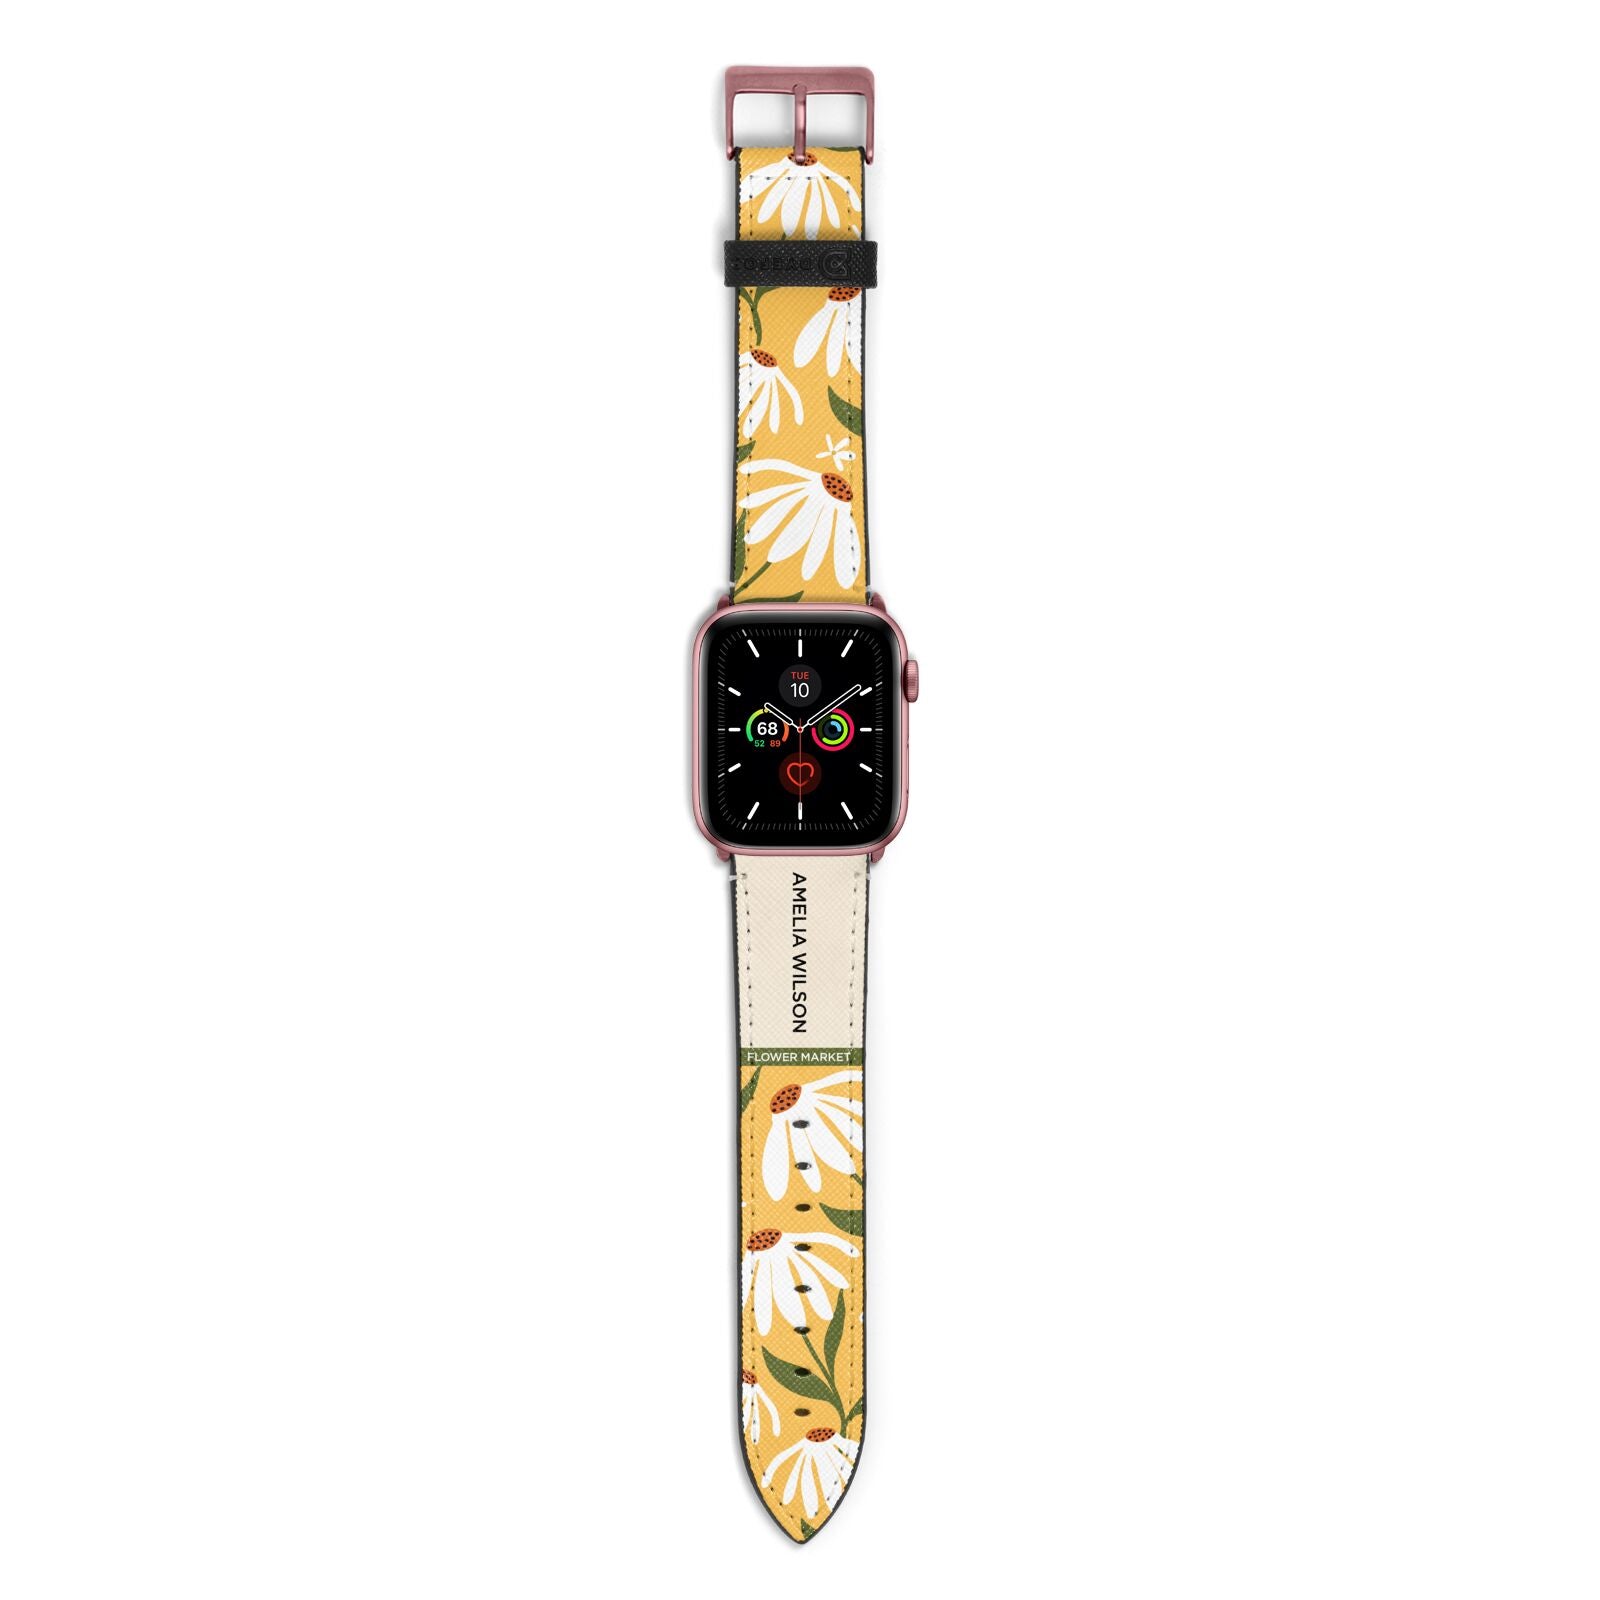 London Flower Market Apple Watch Strap with Rose Gold Hardware